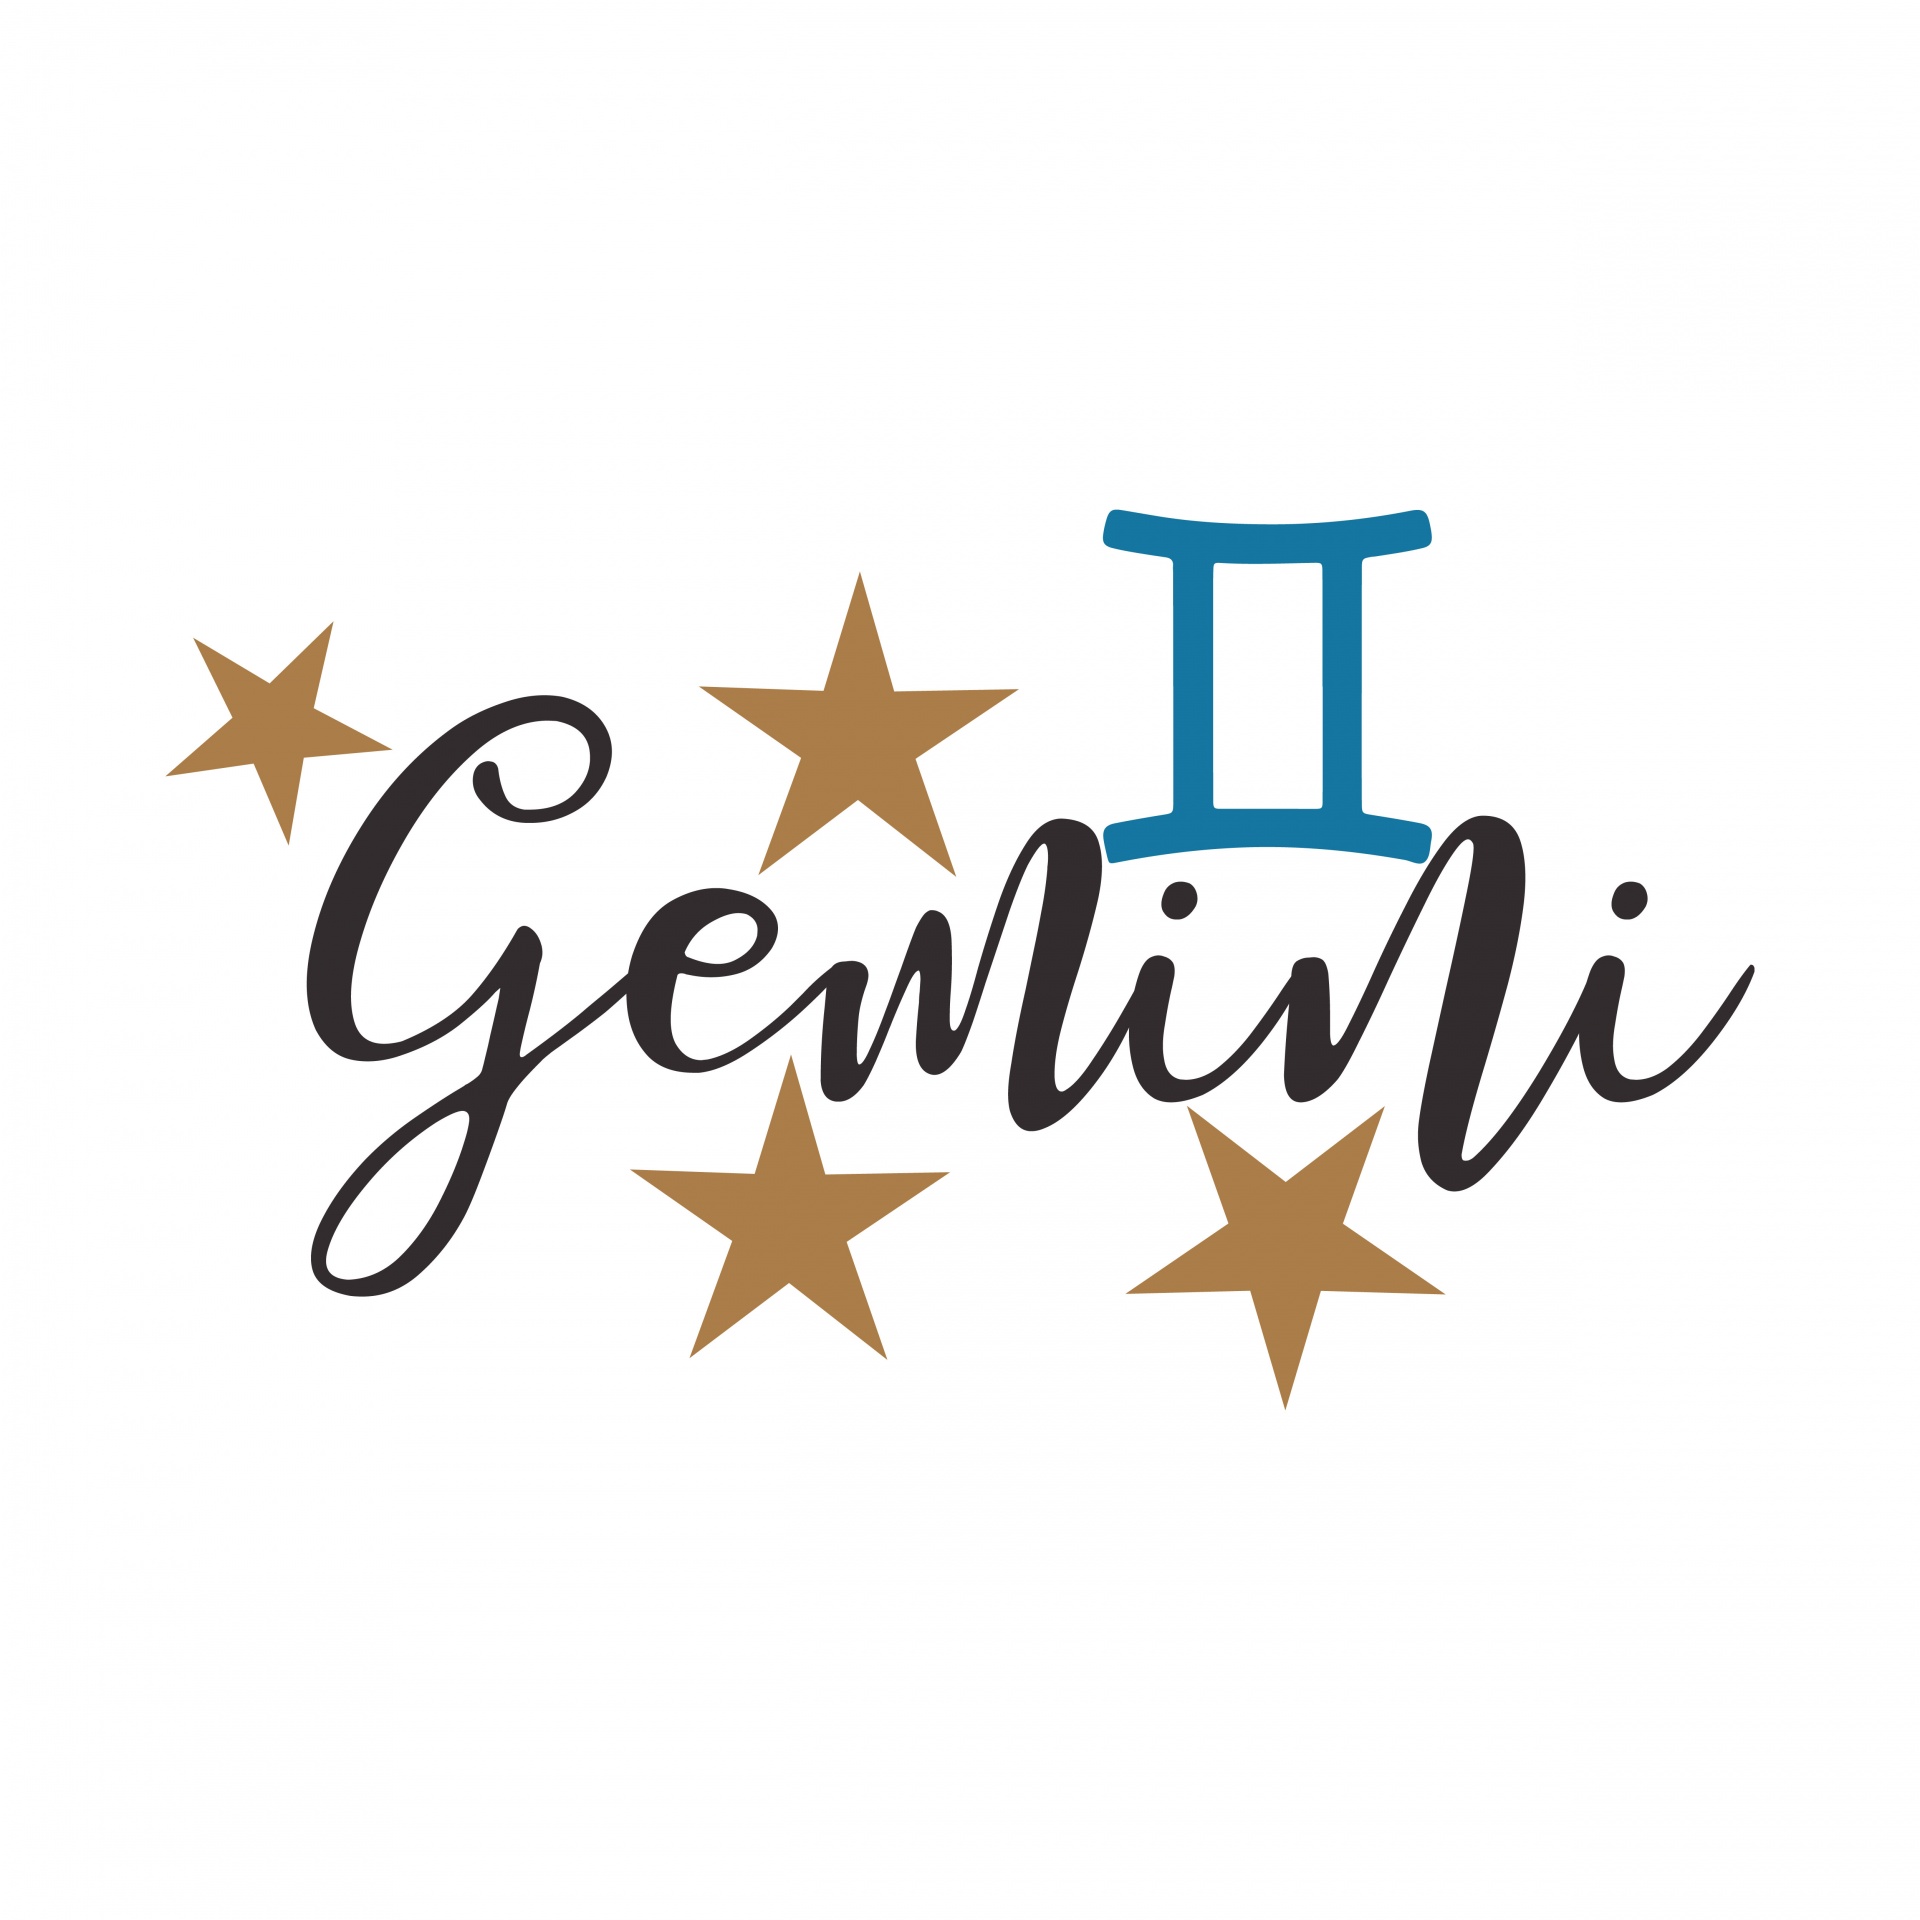 Gemini Personality